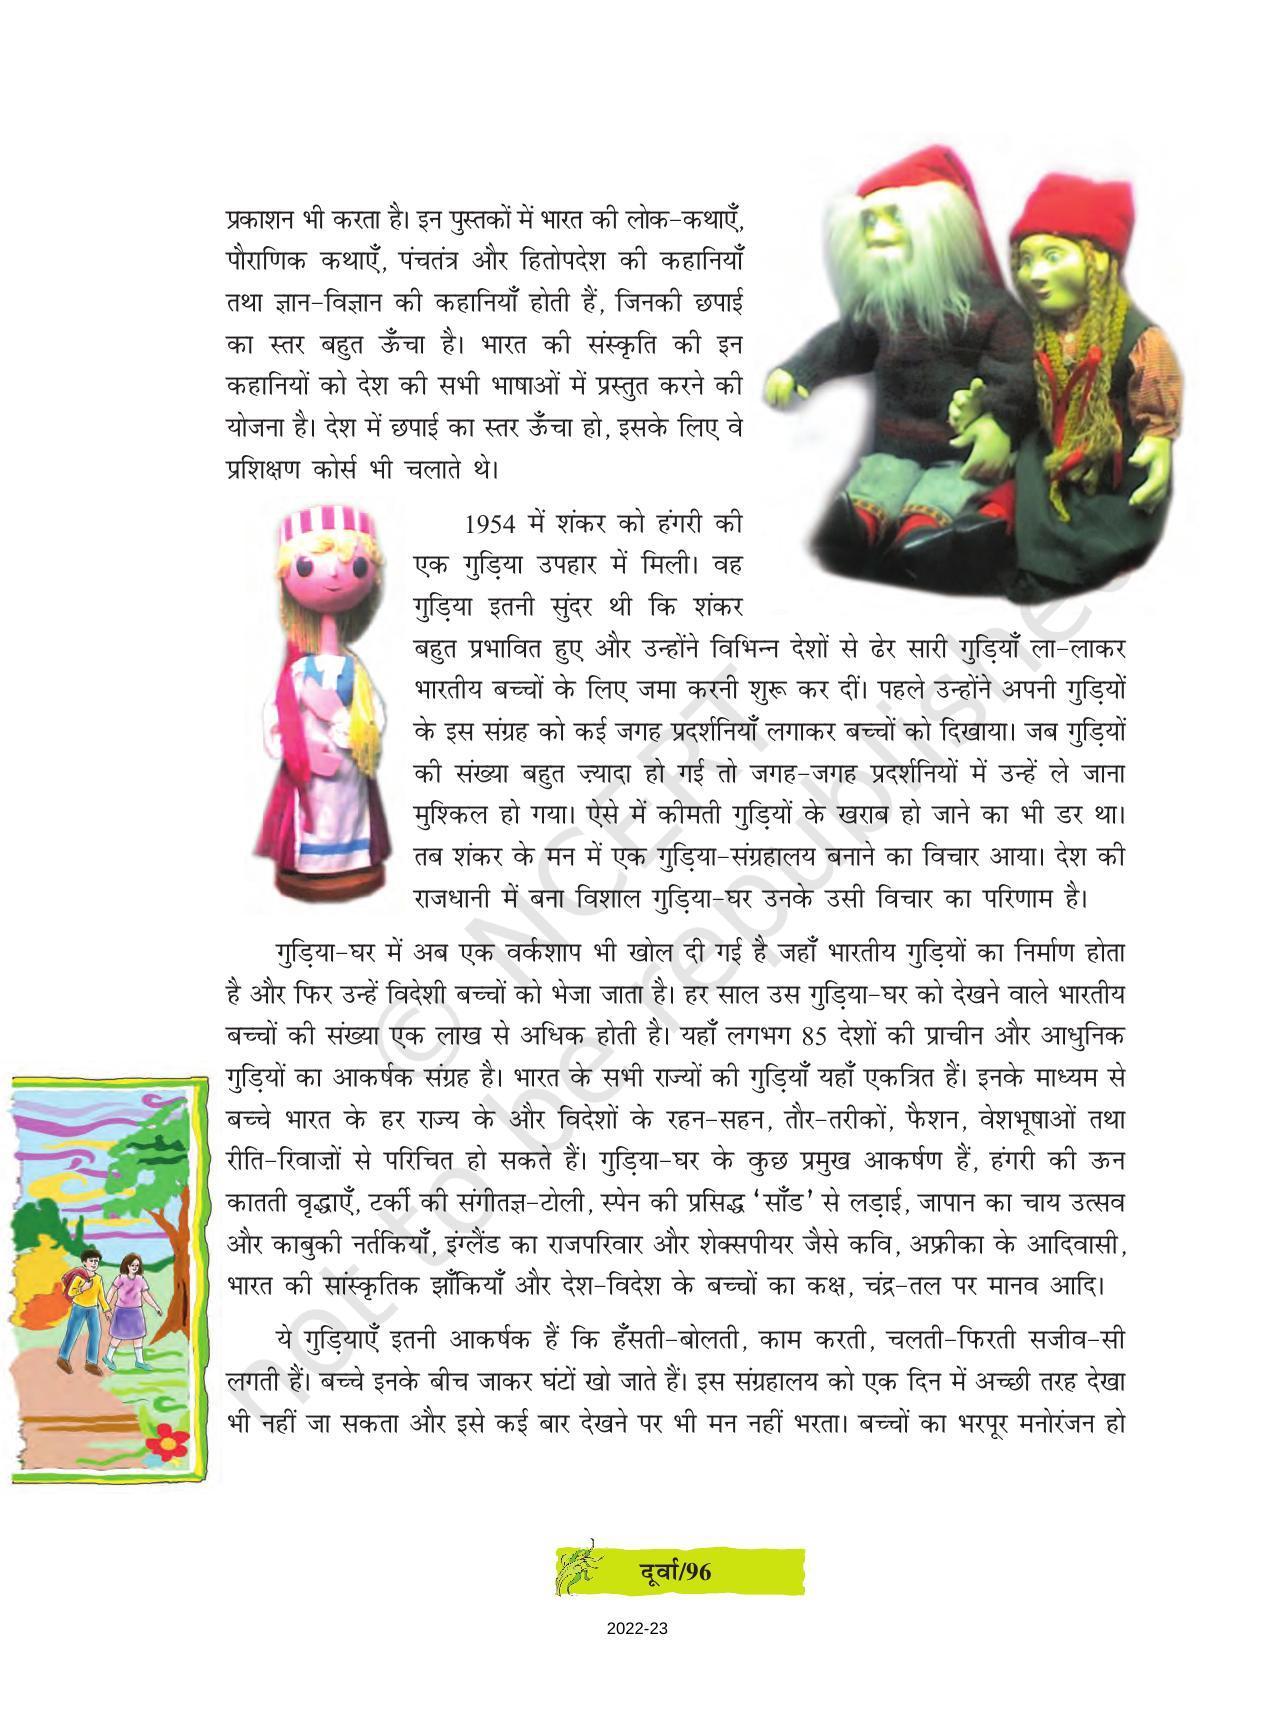 NCERT Book for Class 8 Hindi Durva Chapter 14 बच्चों के प्रिय श्री केशव शंकर पिल्लै (व्यक्तित) - Page 4